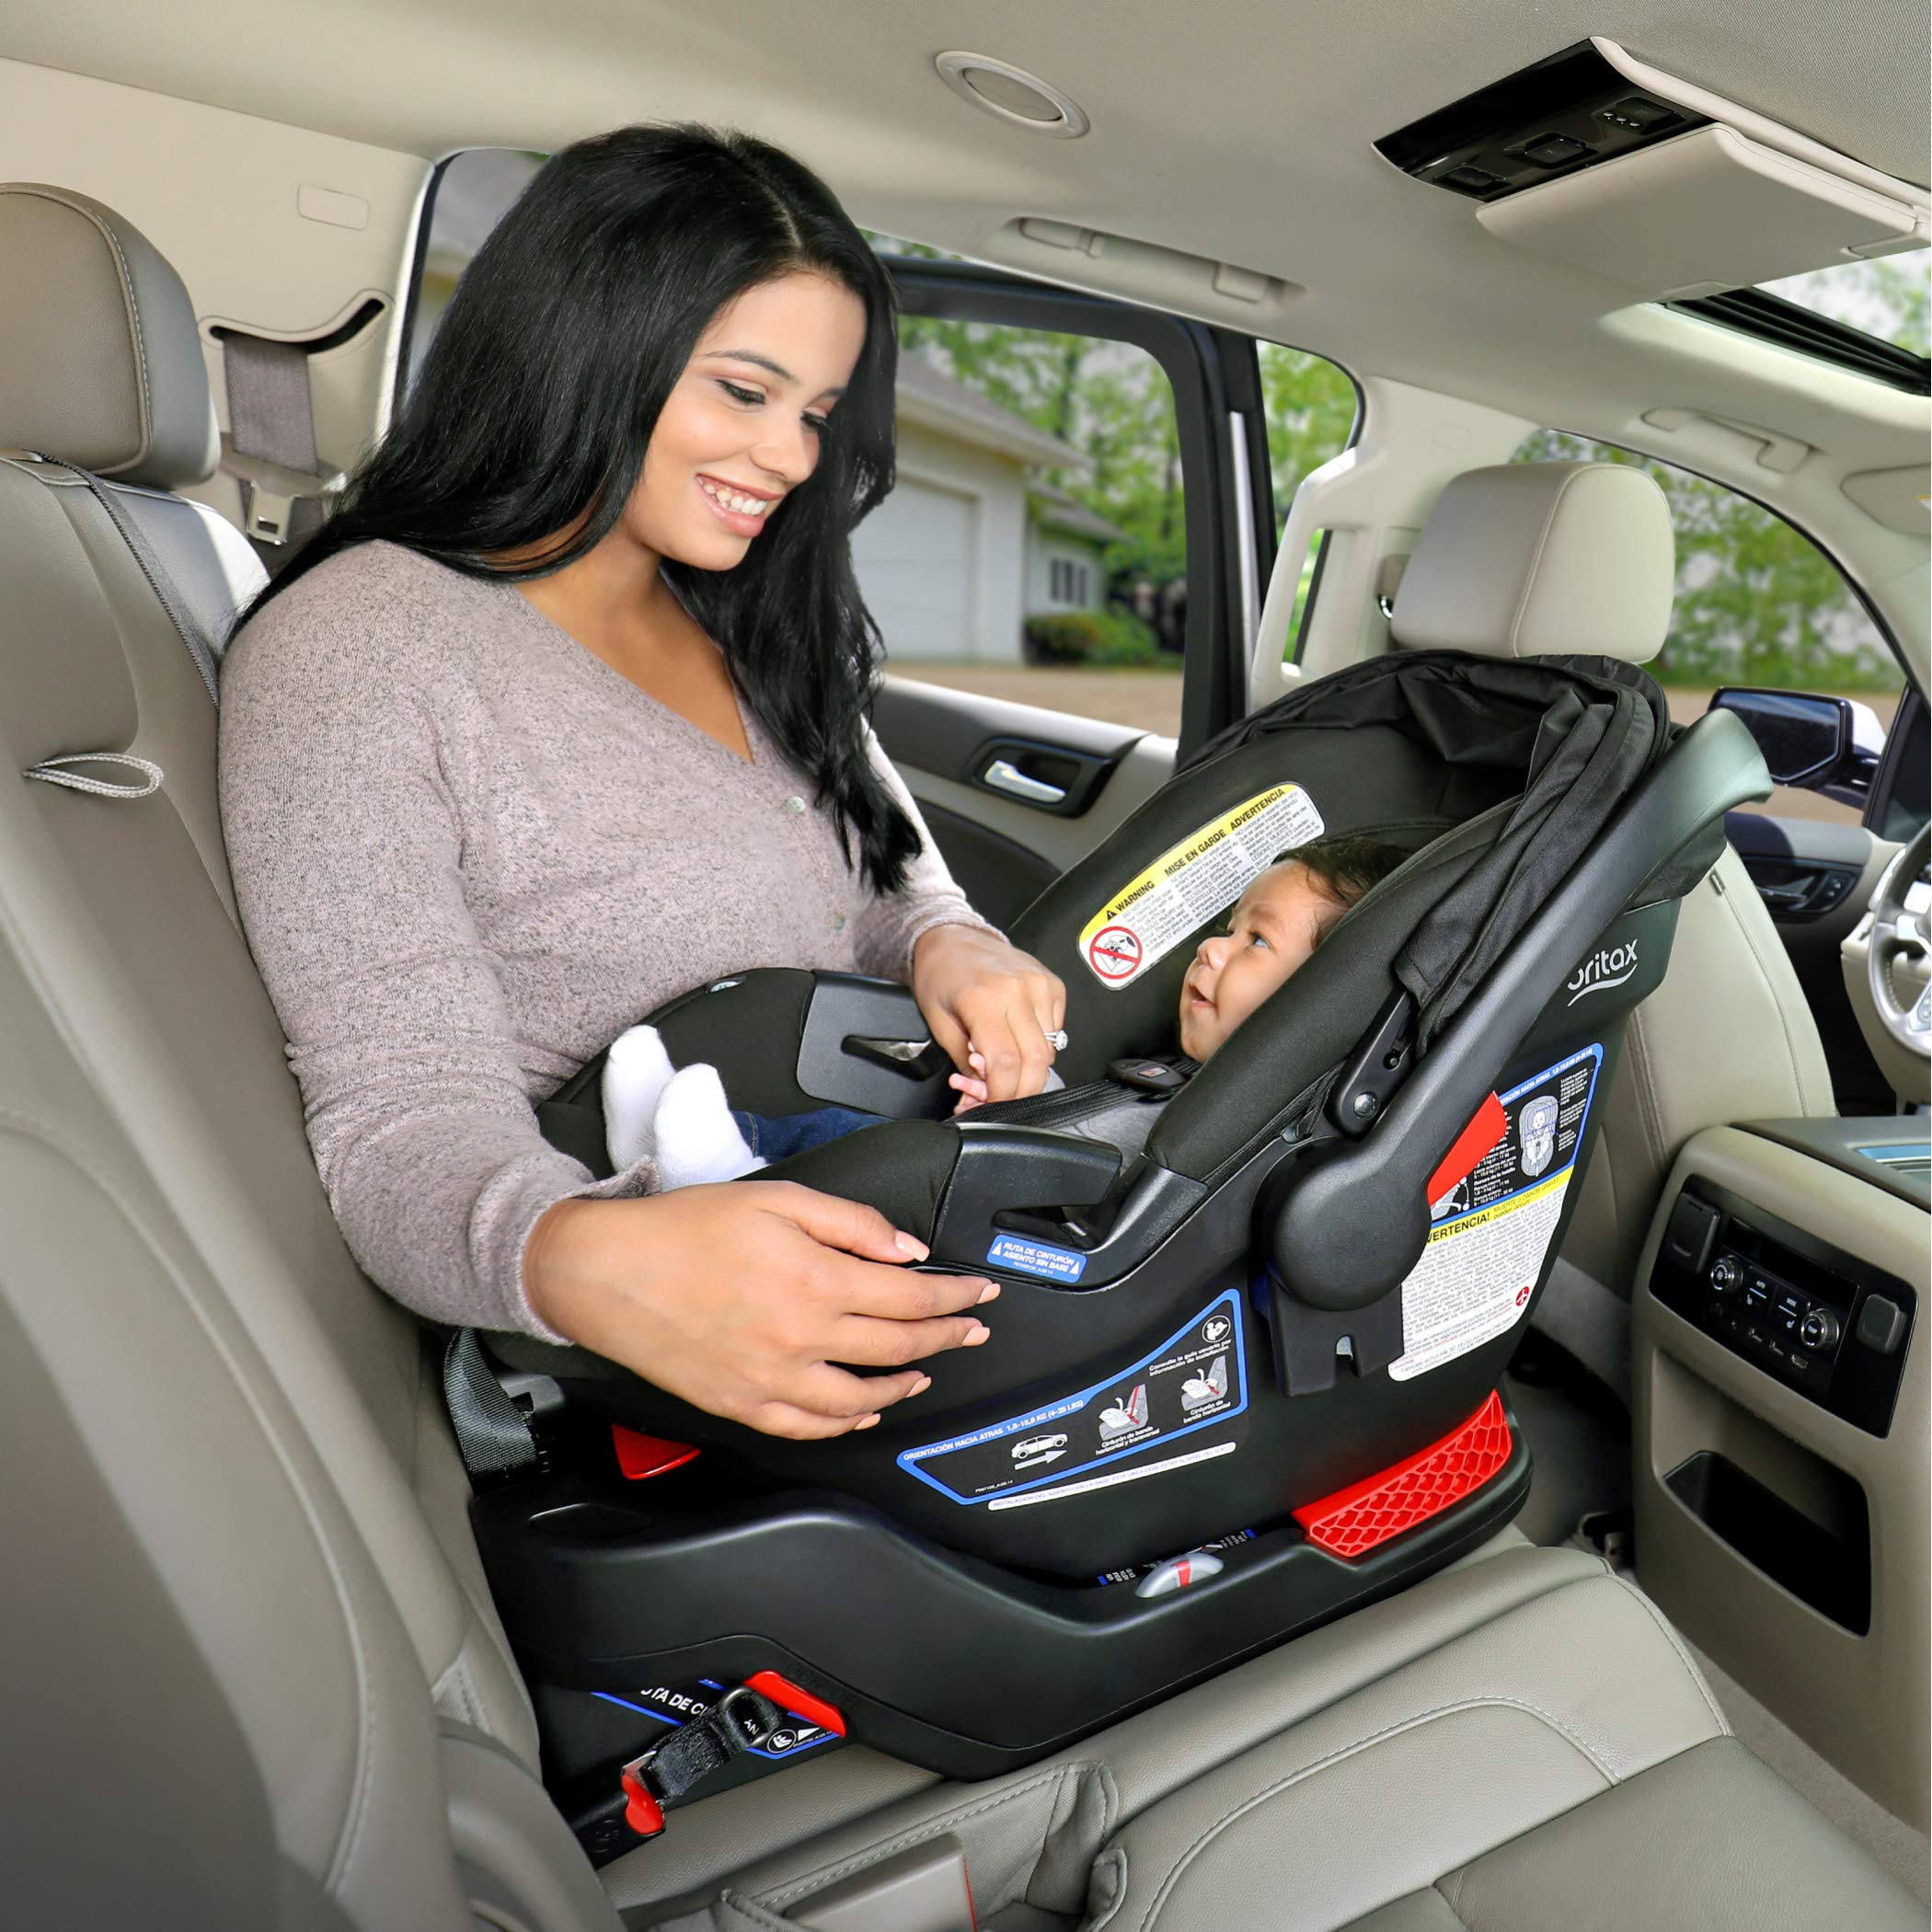 Britax B-Safe Gen2 Infant Car Seat, Eclipse Black SafeWash